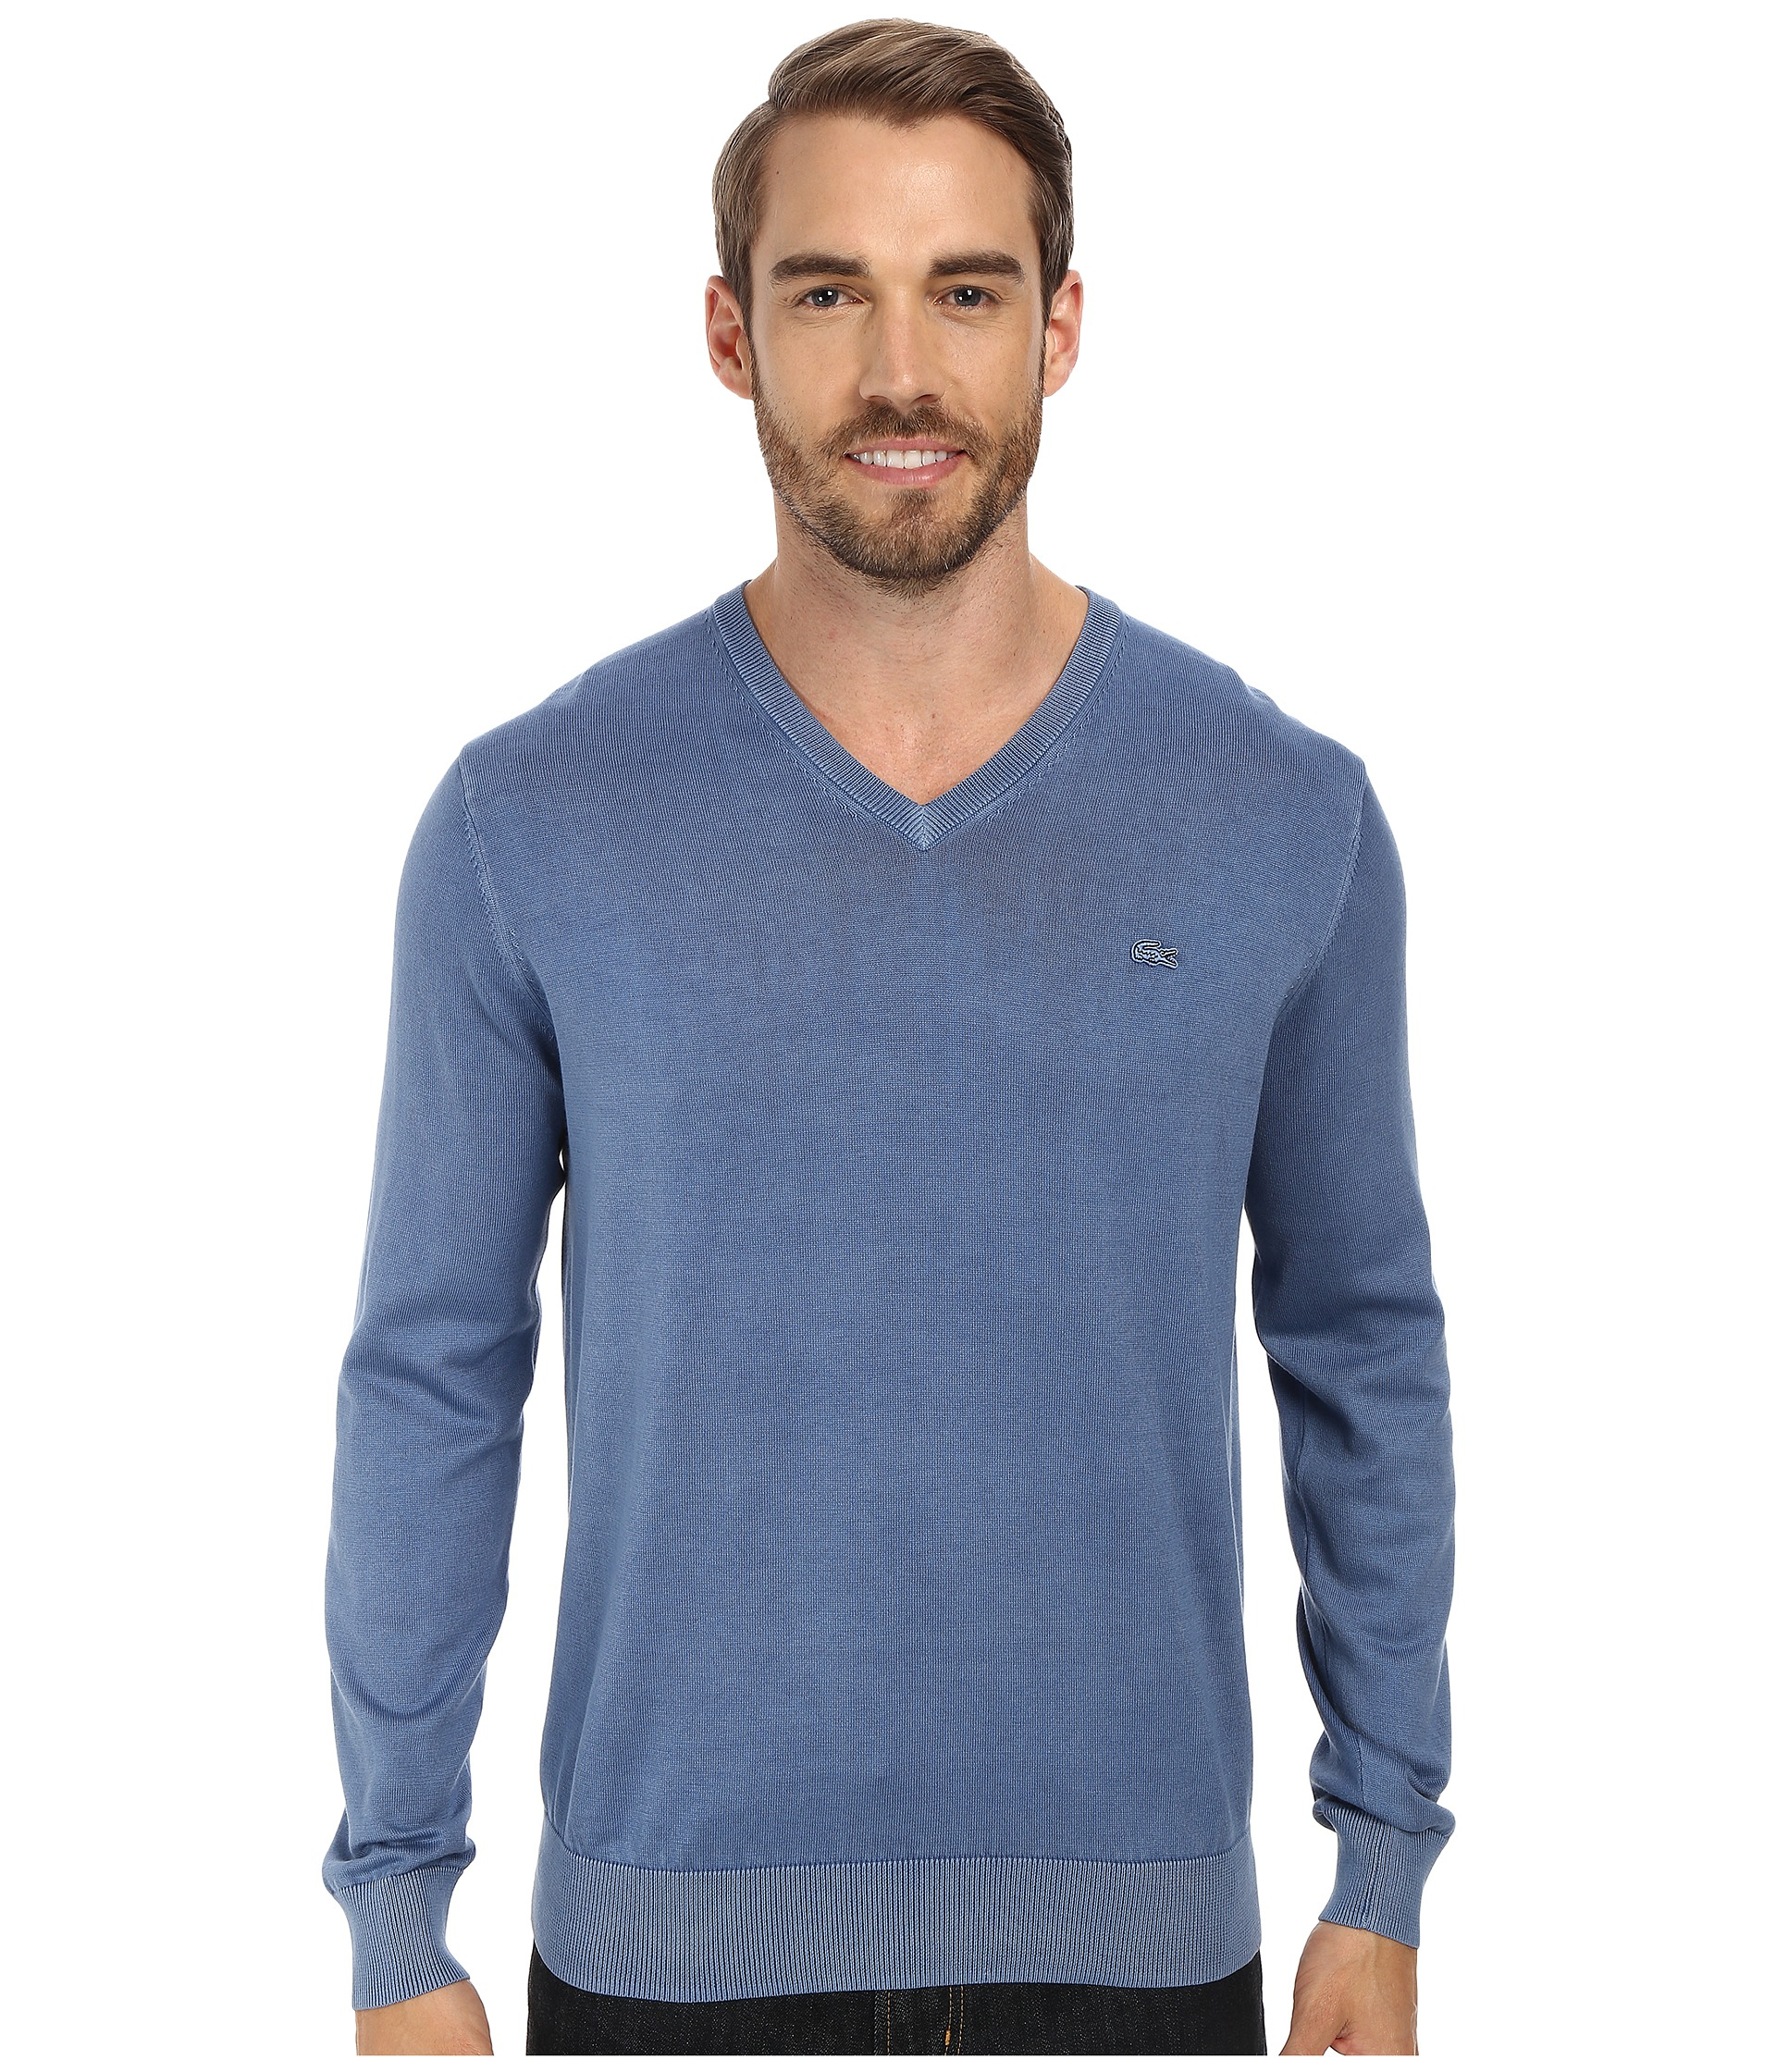 Lyst - Lacoste Jersey V-neck Vintage Wash Sweater in Blue for Men